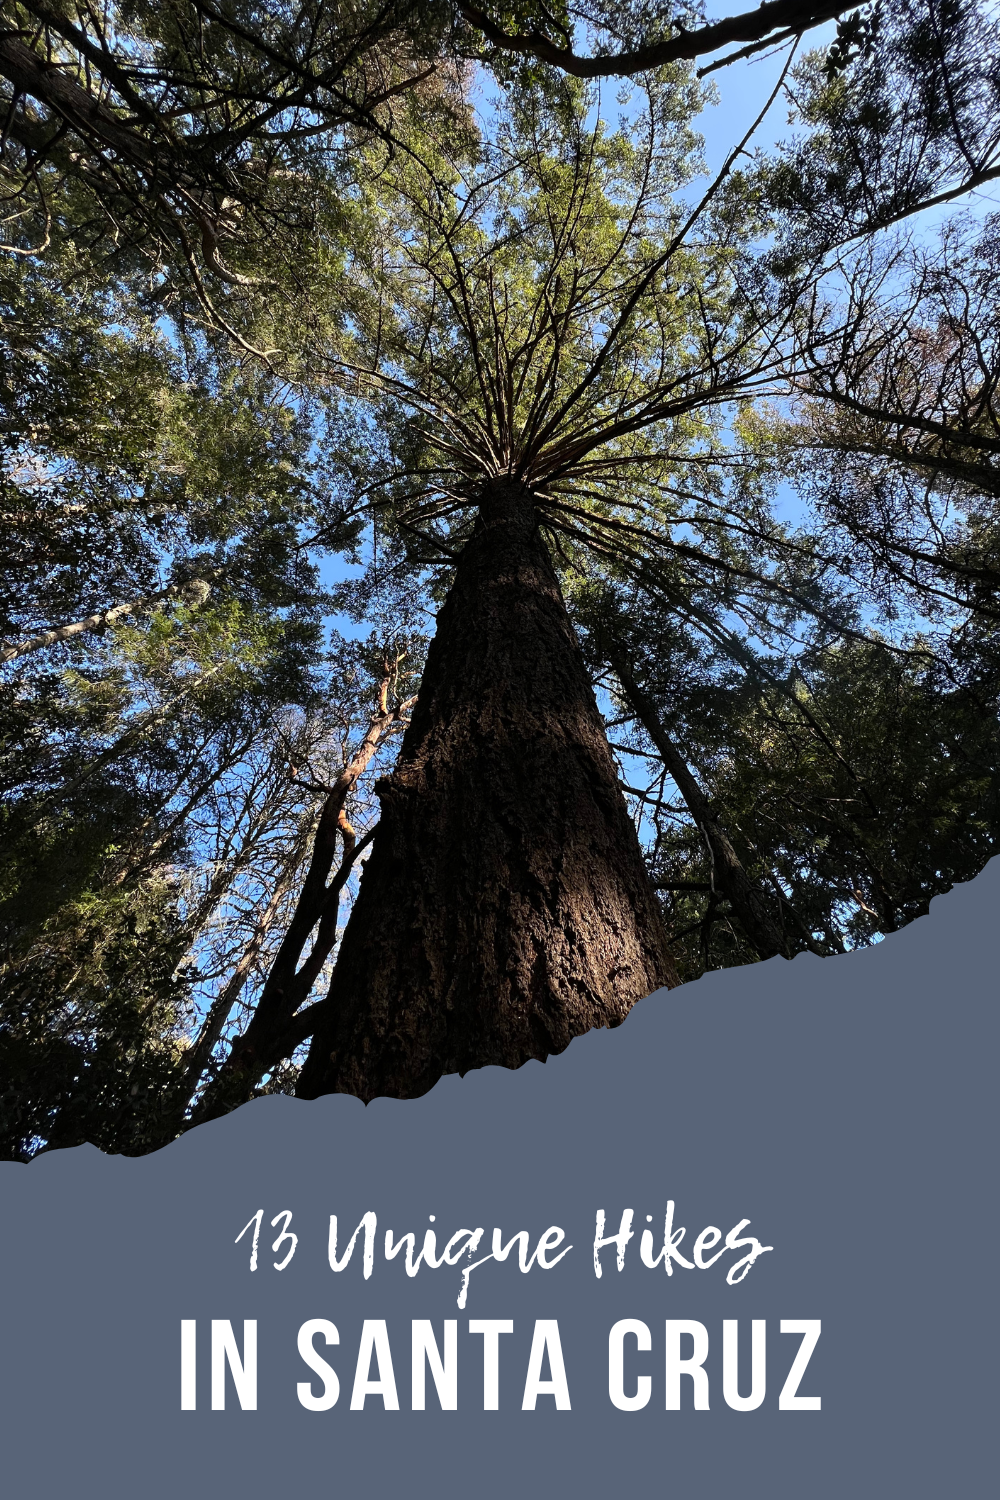 13 unique hiking trails in Santa Cruz